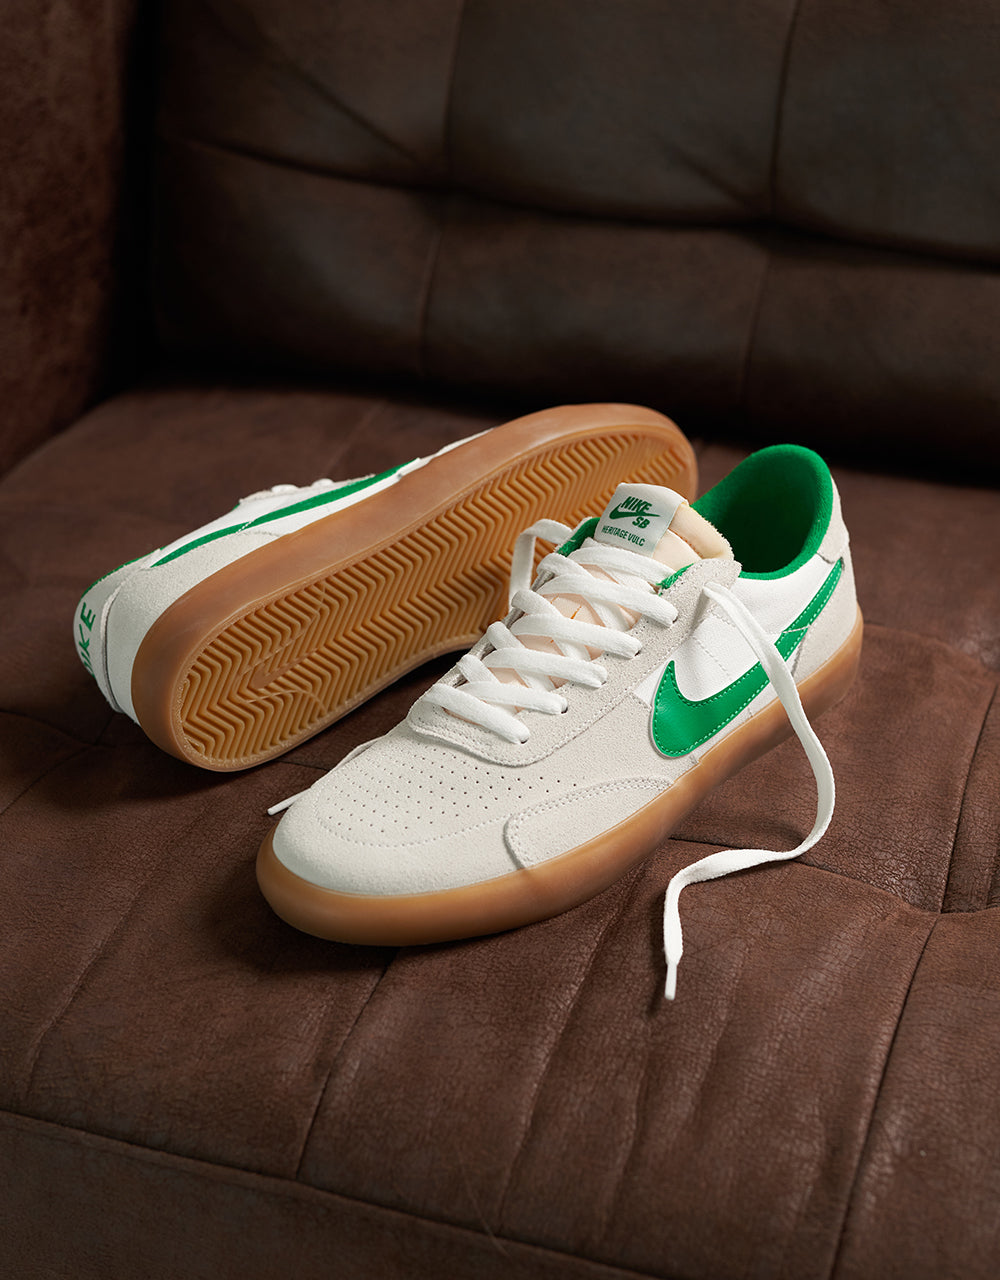 Nike SB Heritage Vulc Skate Shoes - Summit White/Lucky Green-White